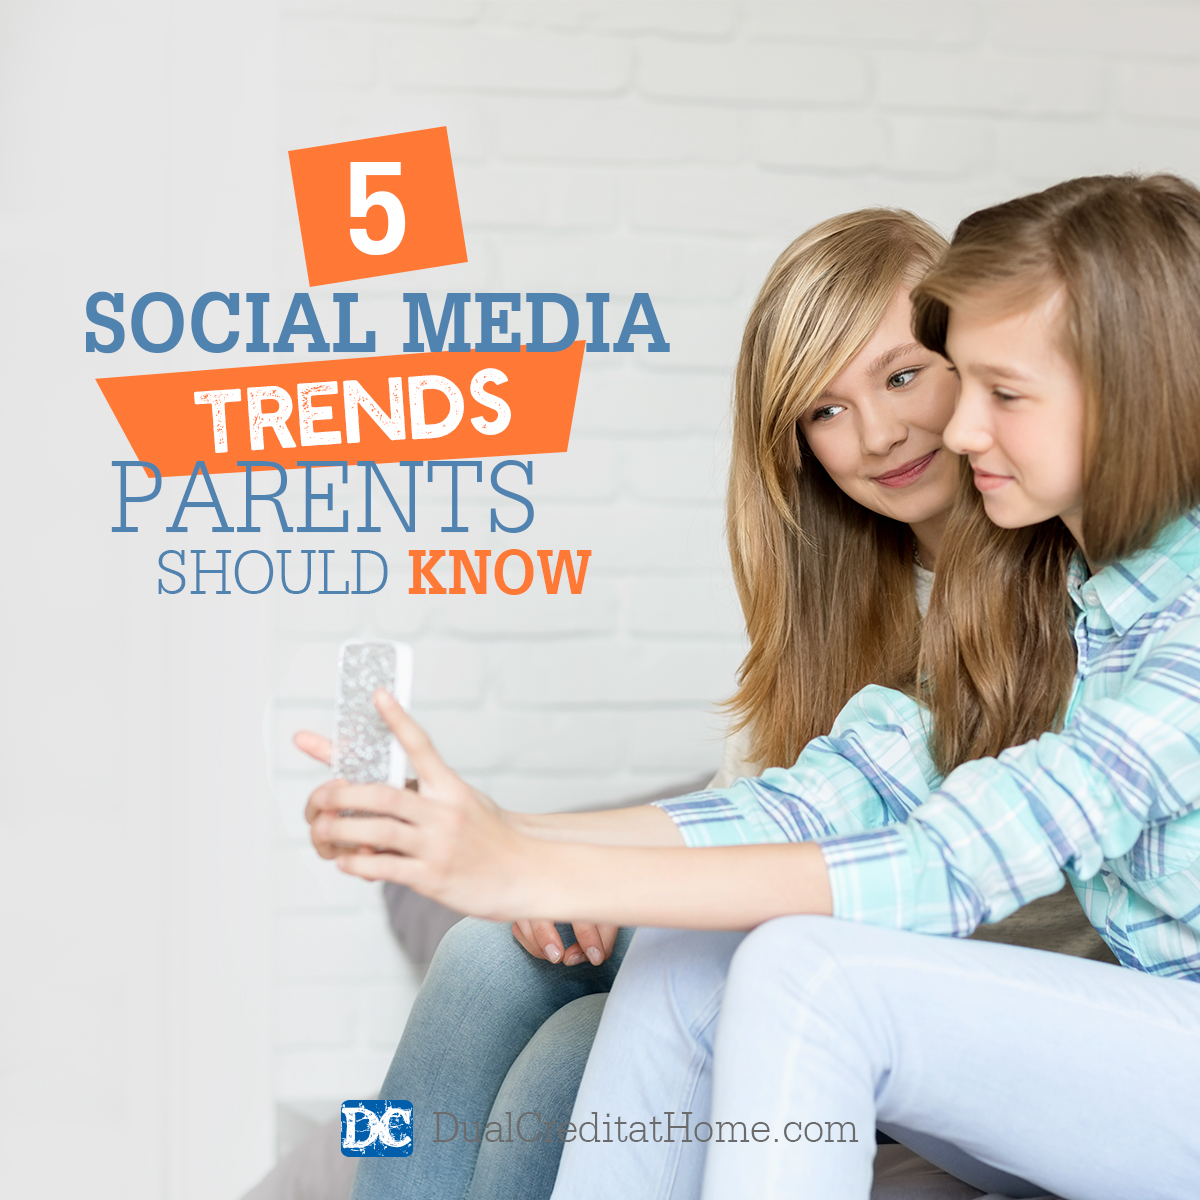 5 Social Media Trends Parents Should Know